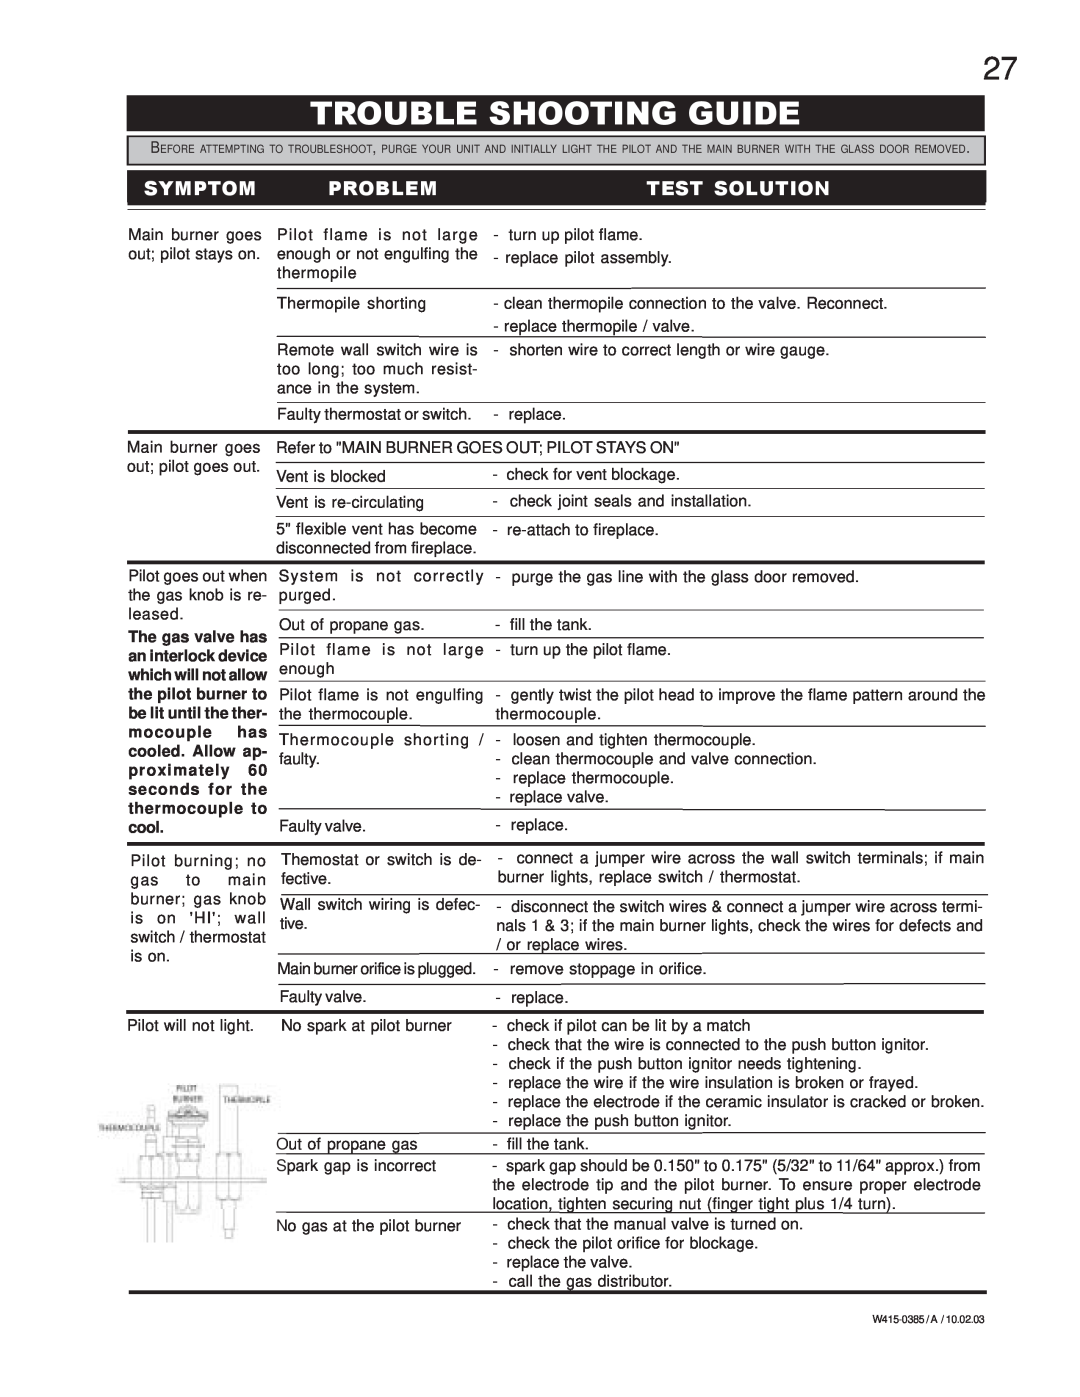 Continental BCDV42N, BCDV42P manual Trouble Shooting Guide, Symptom, Problem, Test Solution 